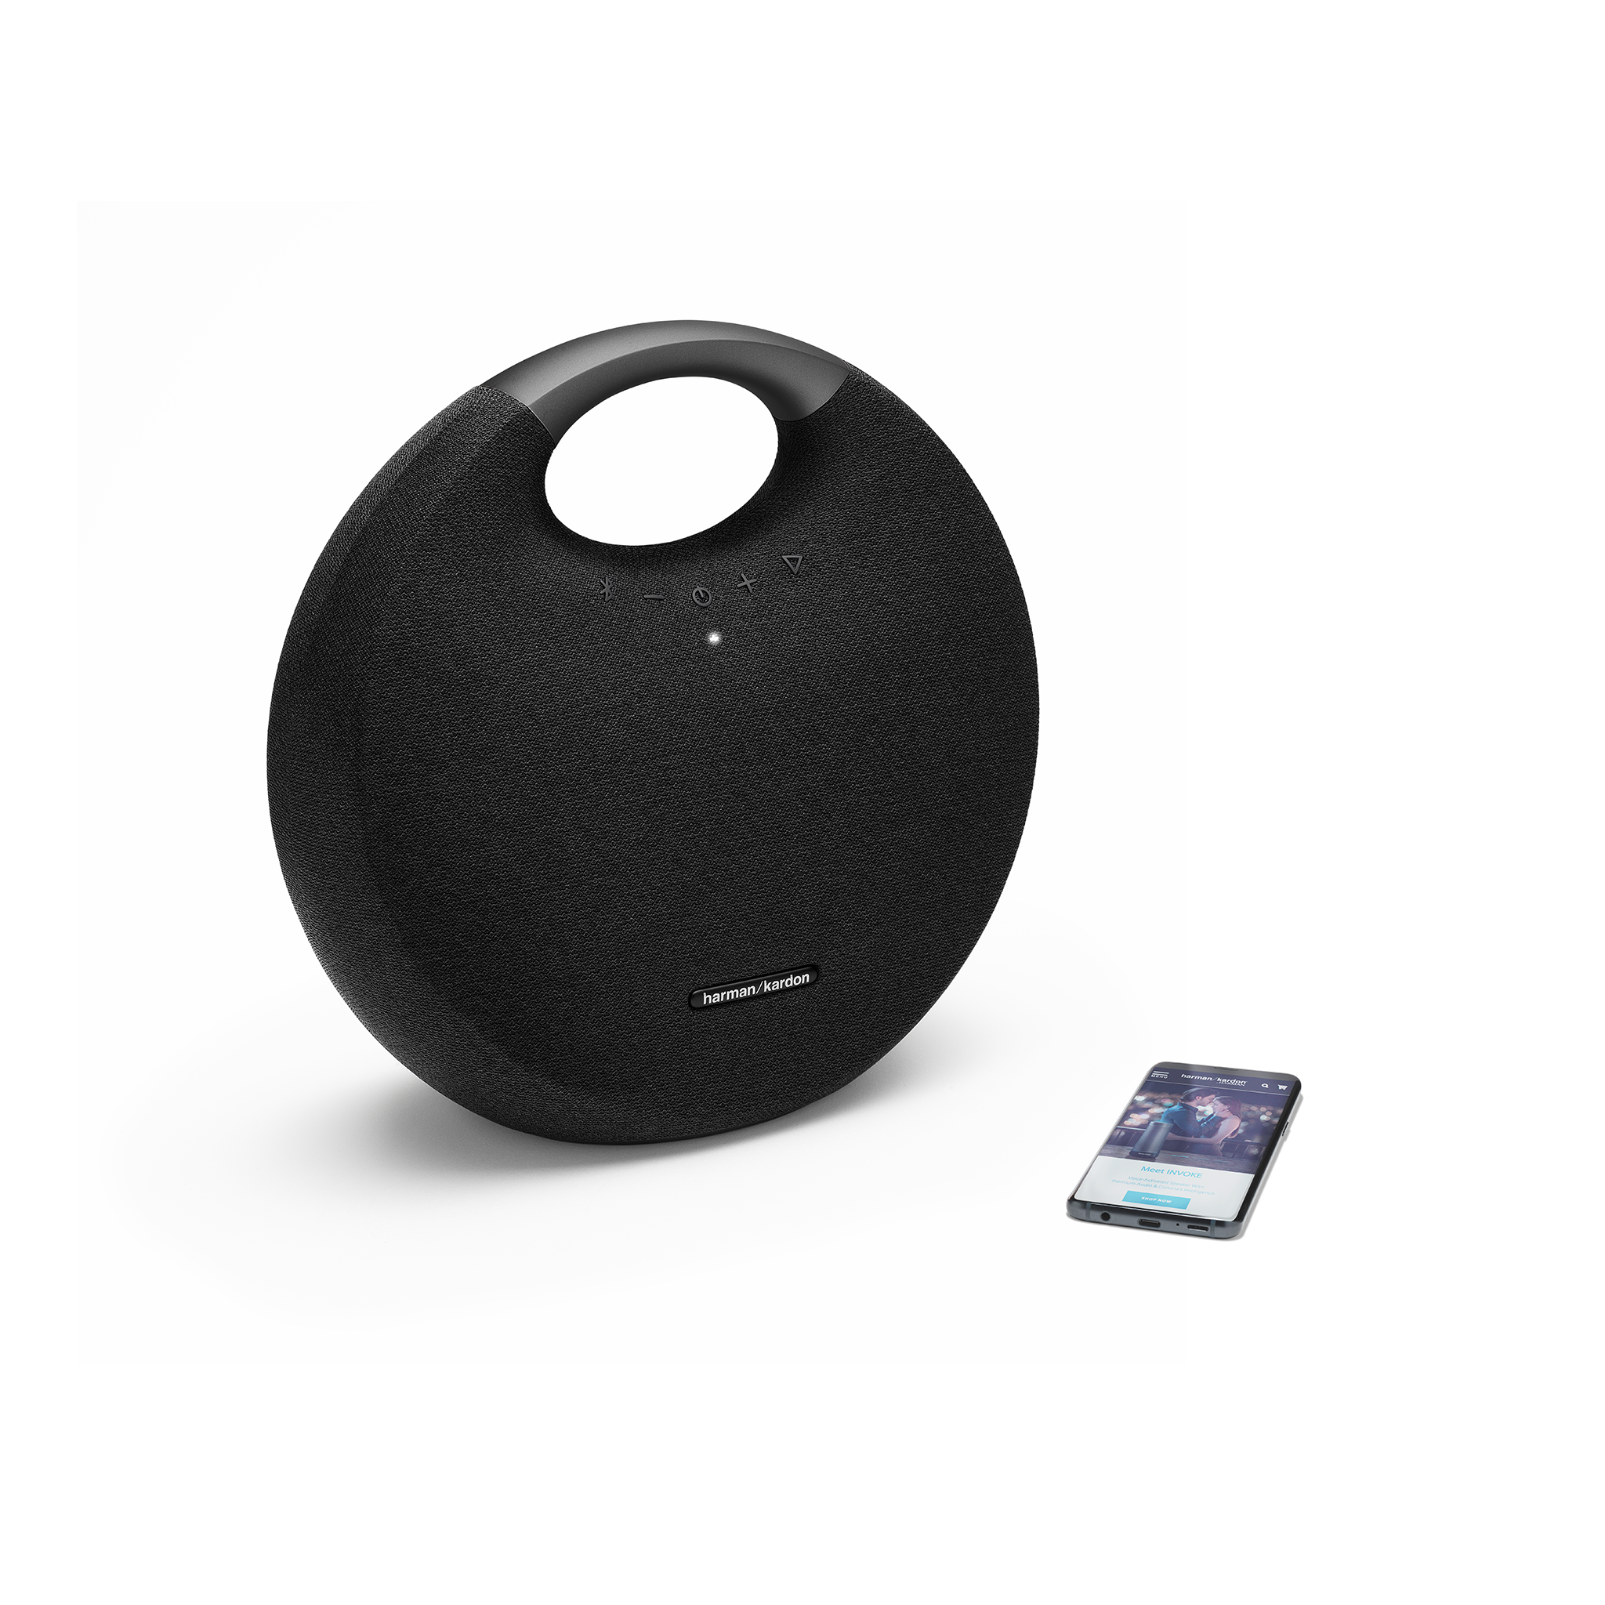 Onyx Studio 6 - Black - Portable Bluetooth speaker - Detailshot 1